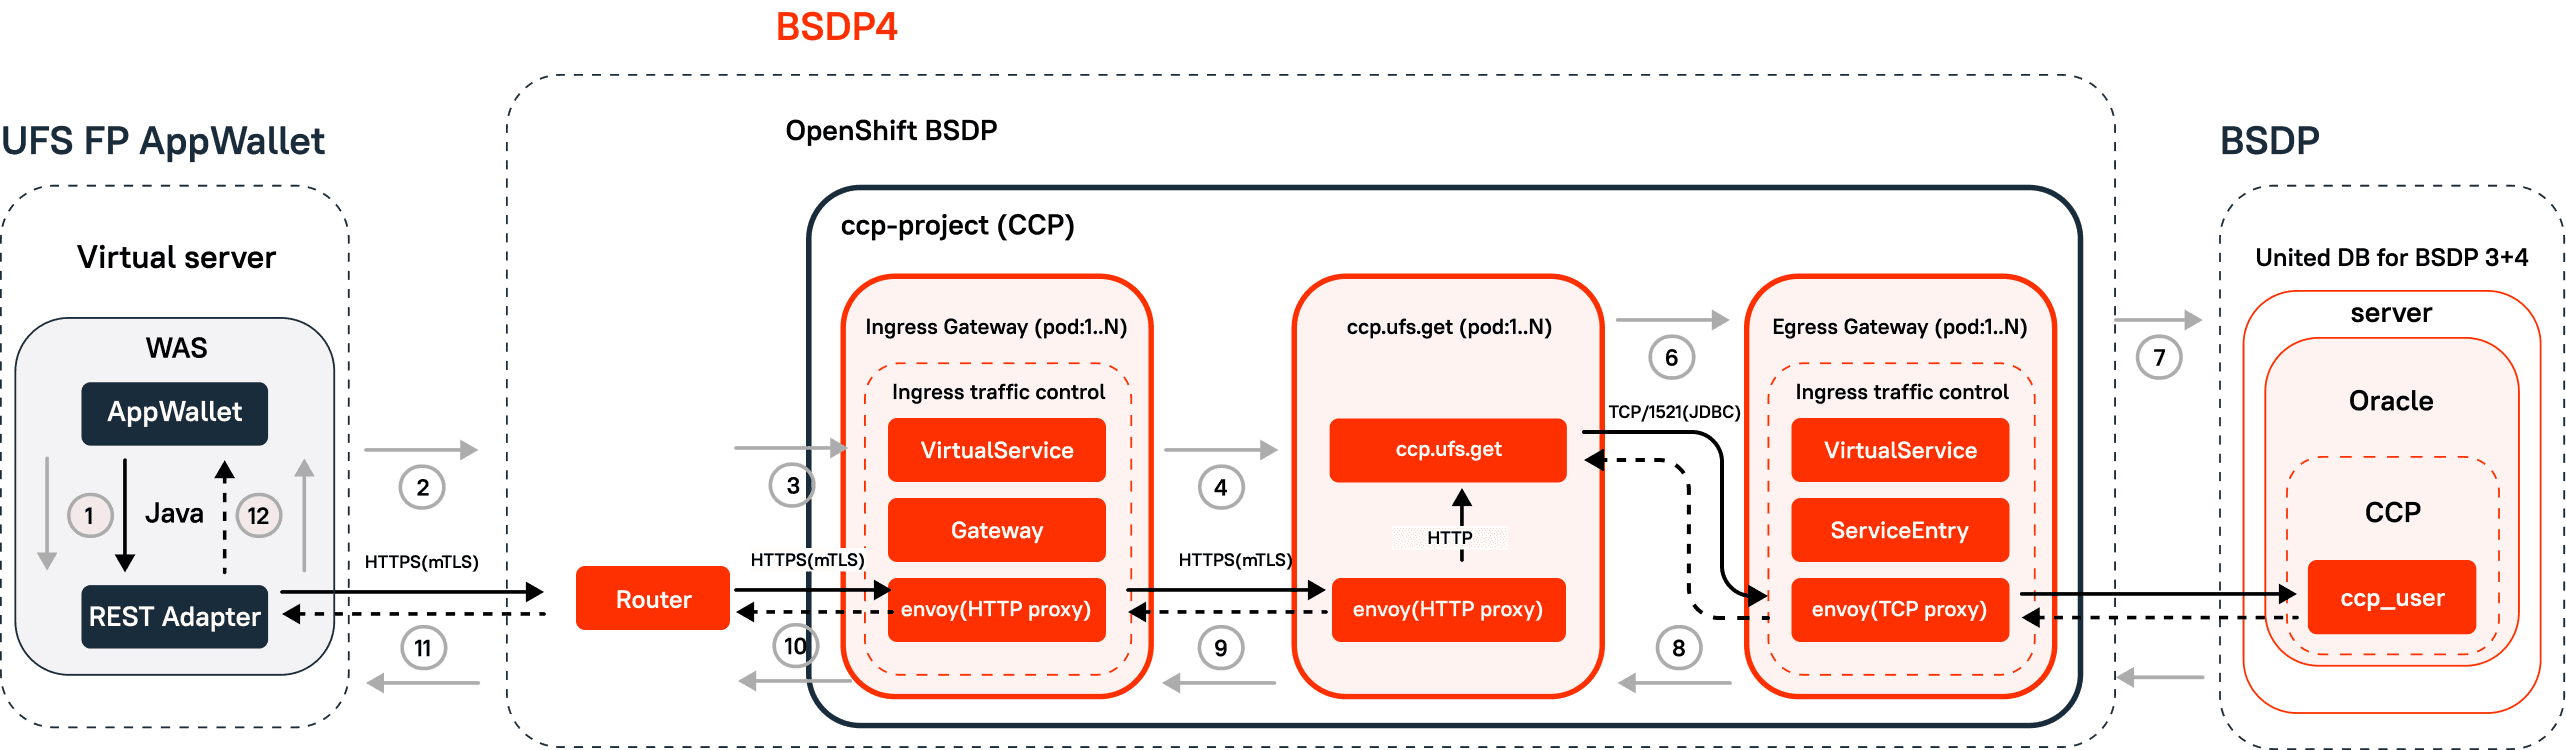 BSDP 4 architecture- OpenShift